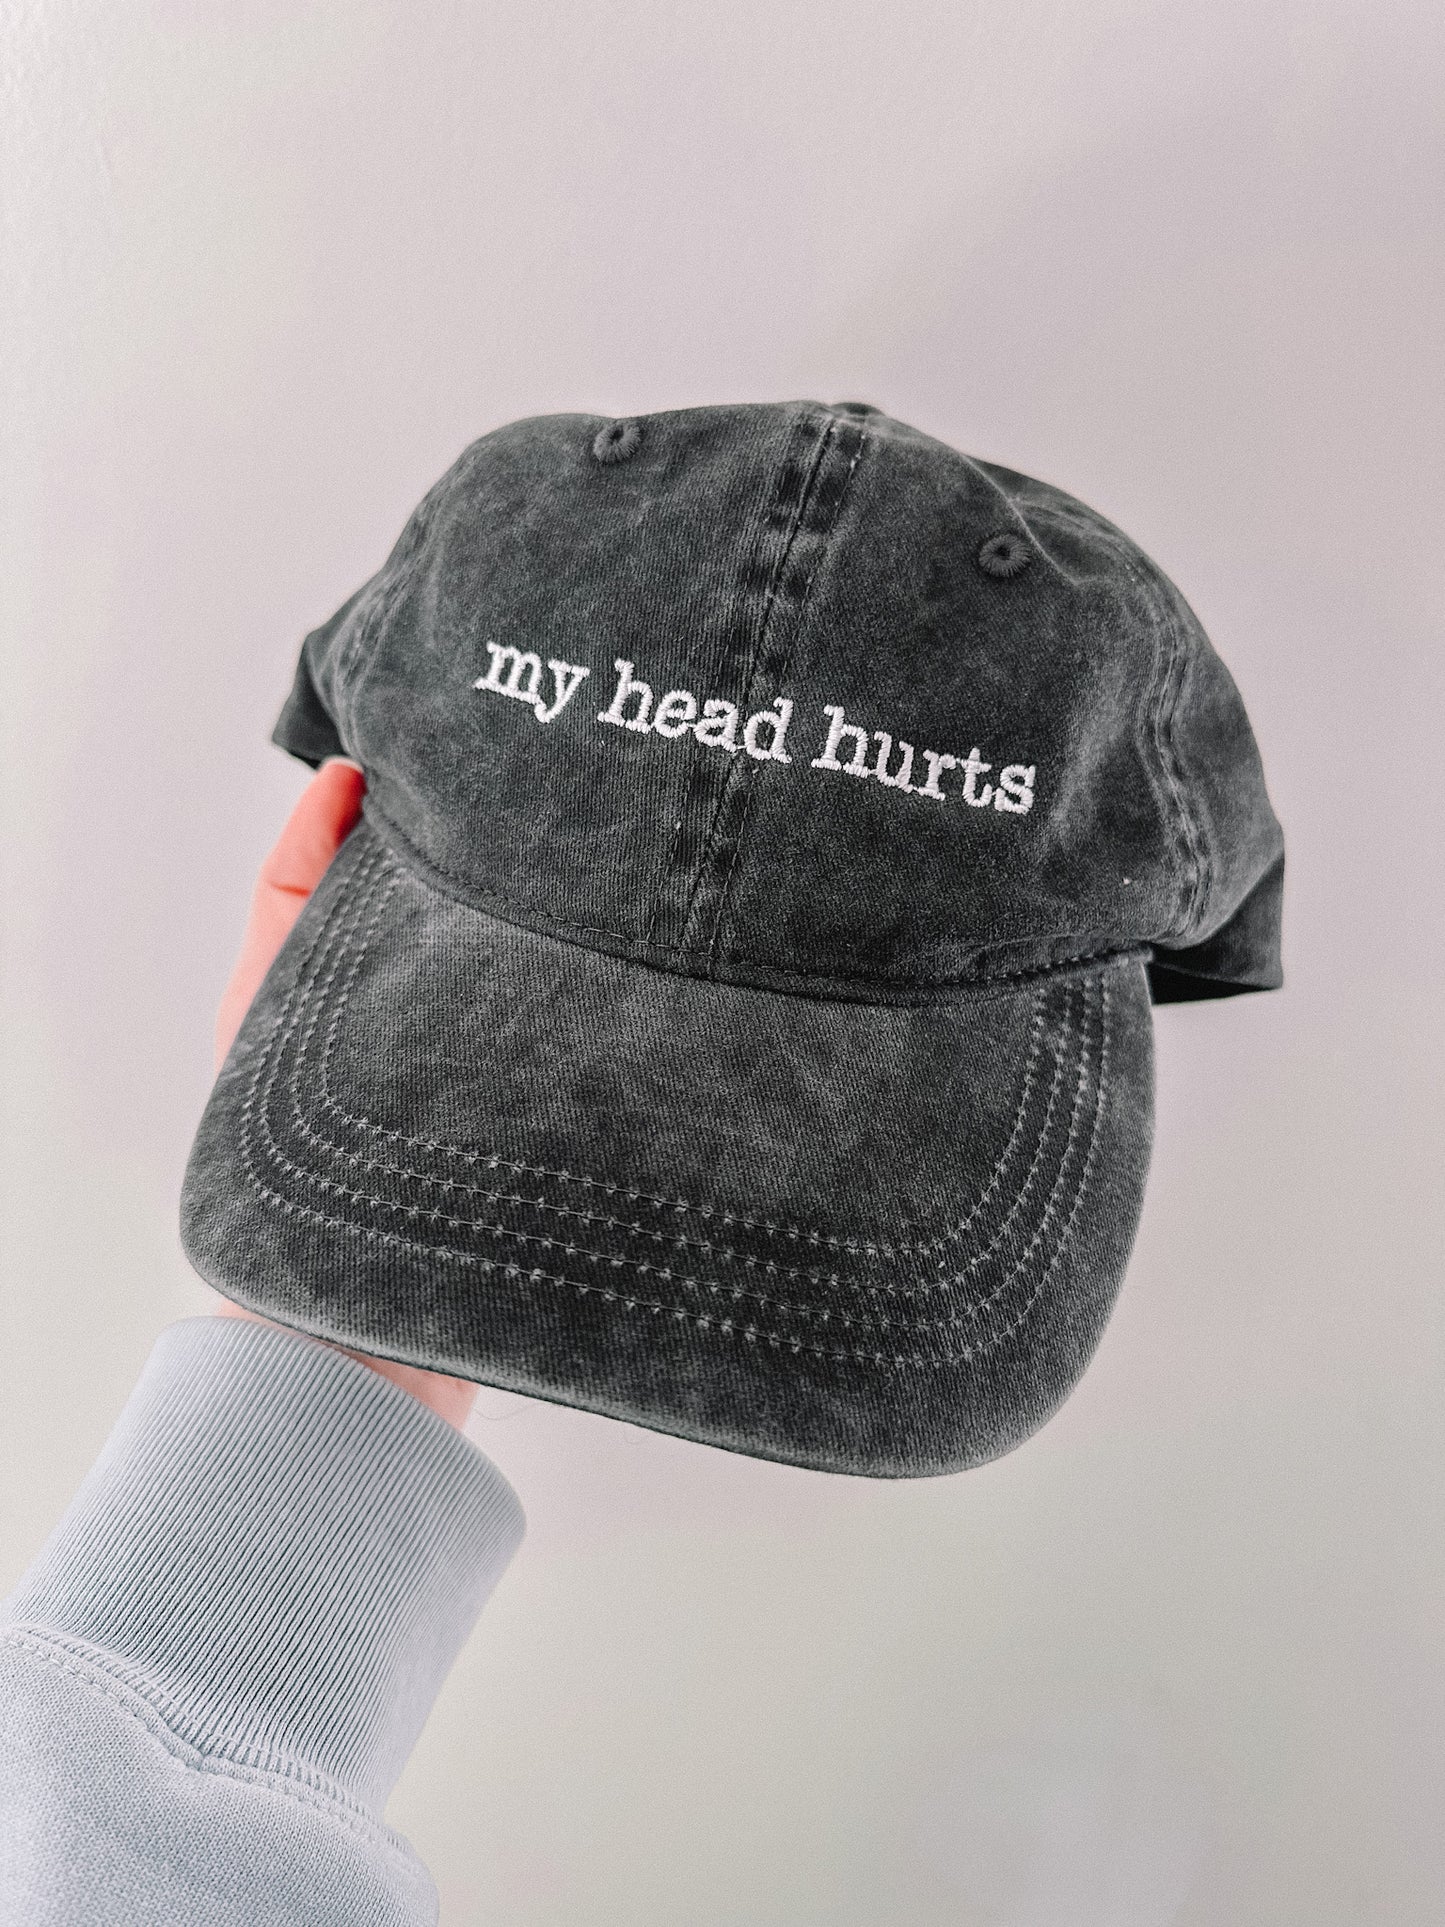 My Head Hurts embroidered baseball cap